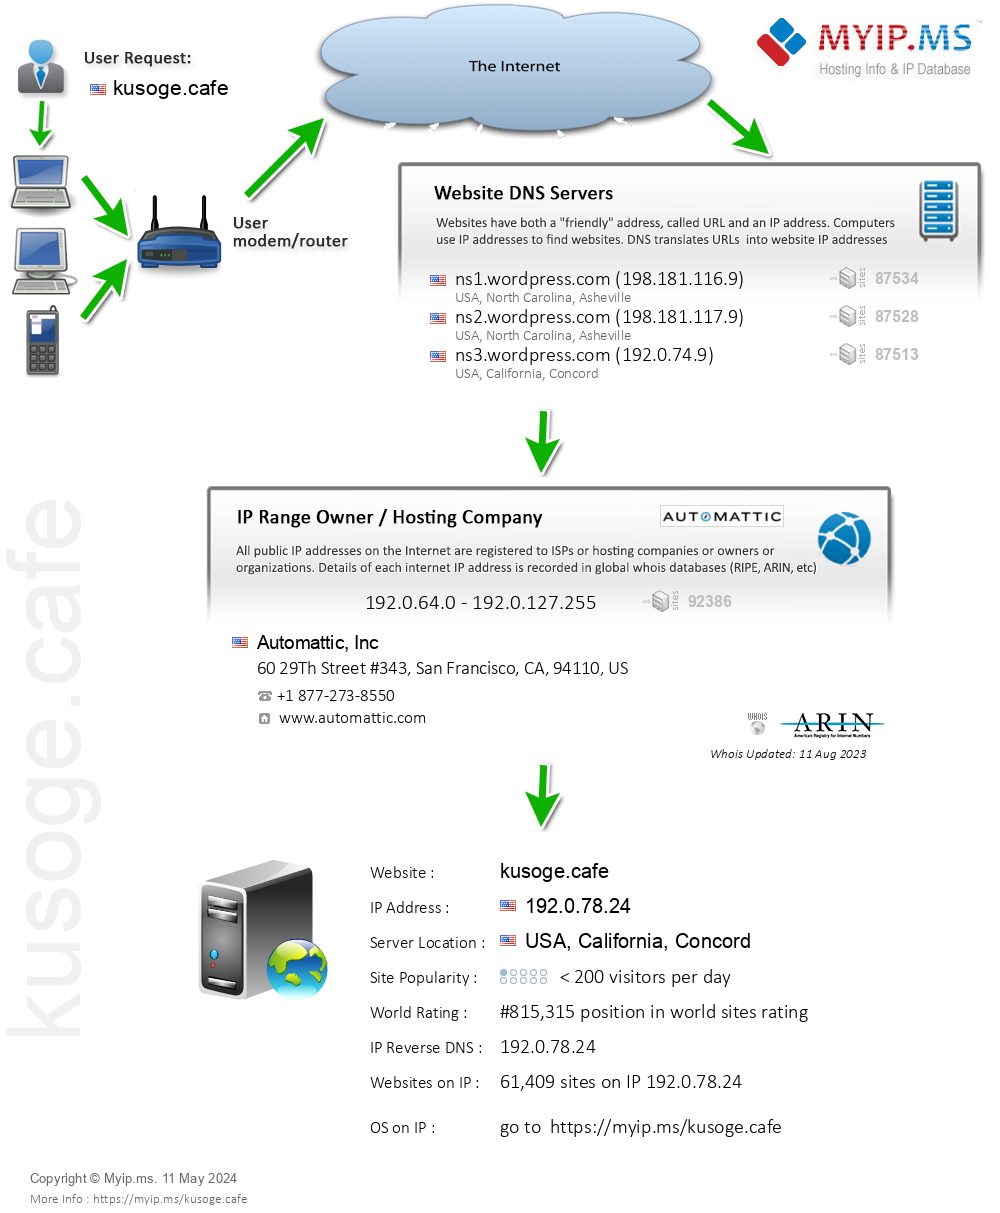 Kusoge.cafe - Website Hosting Visual IP Diagram